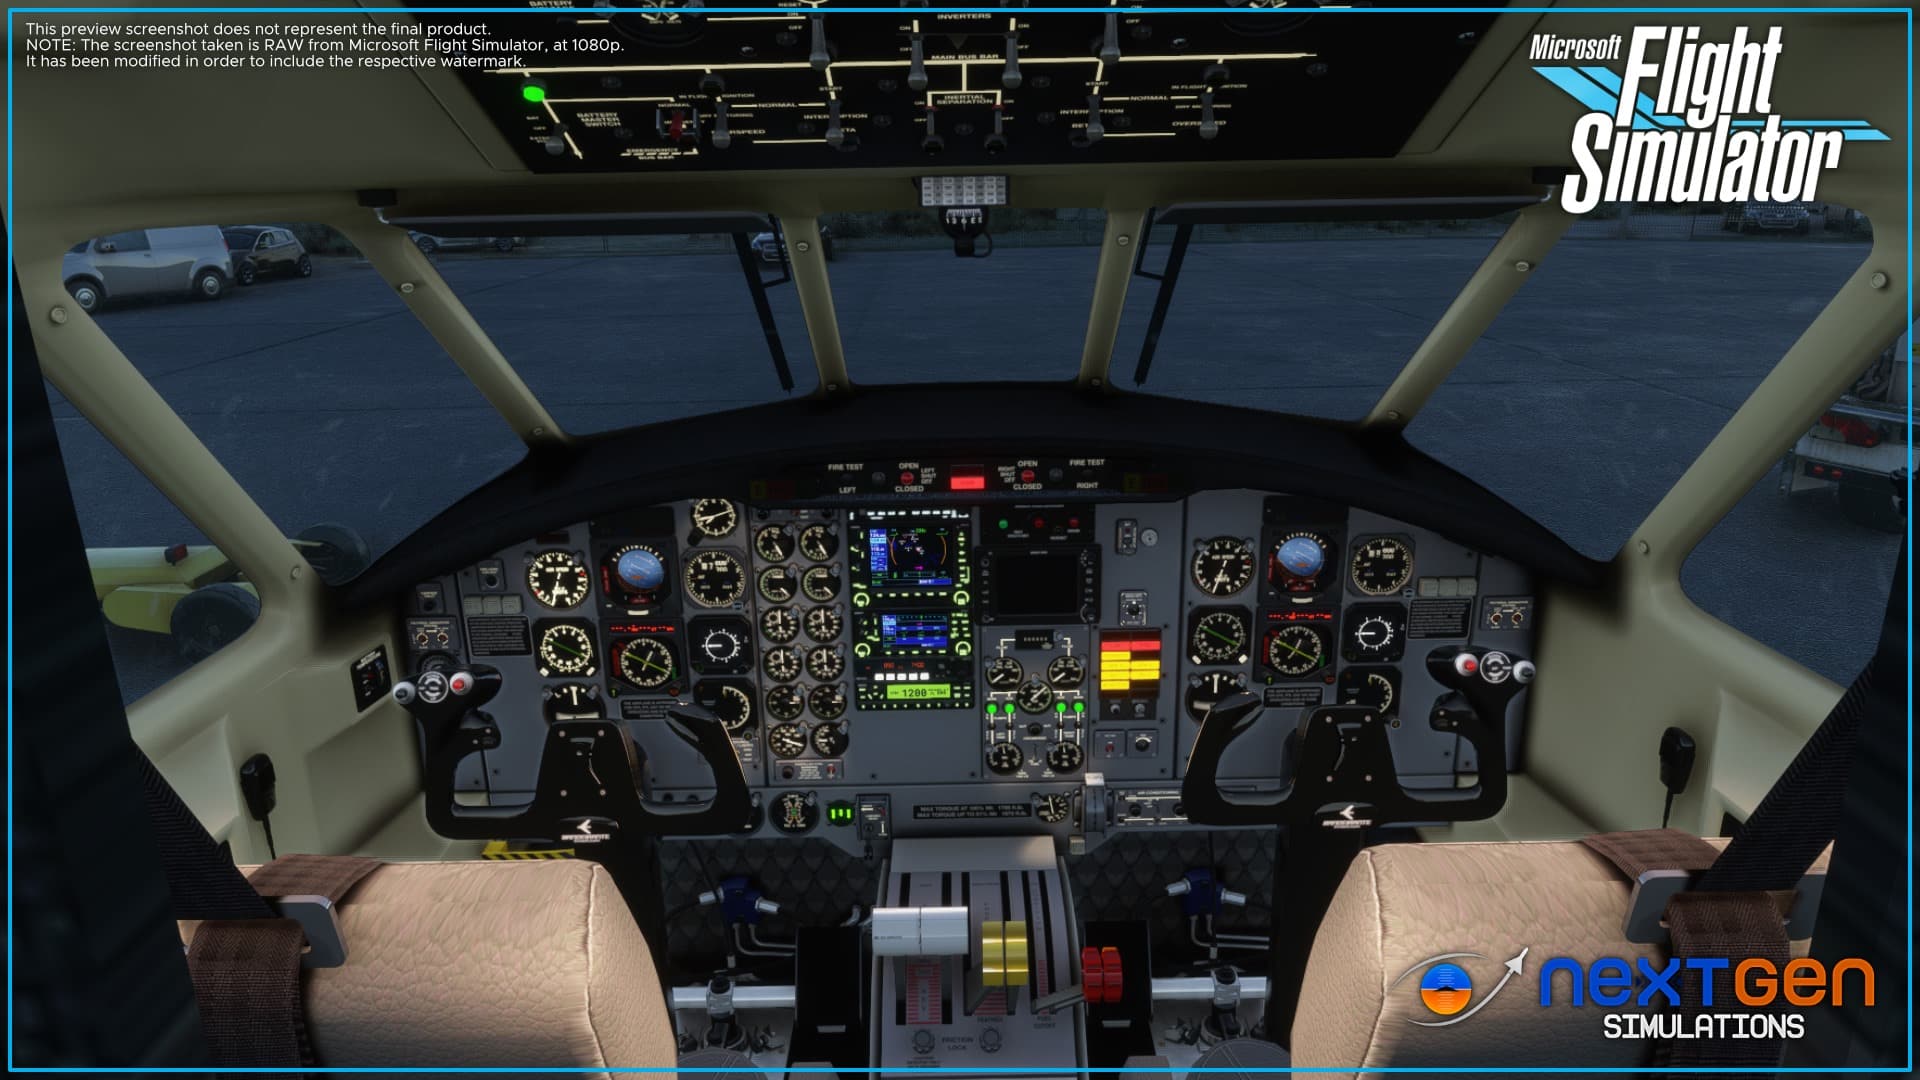 NextGen Simulations Addresses Embraer EMB 110 Development for MSFS - Microsoft Flight Simulator, NextGen Sim